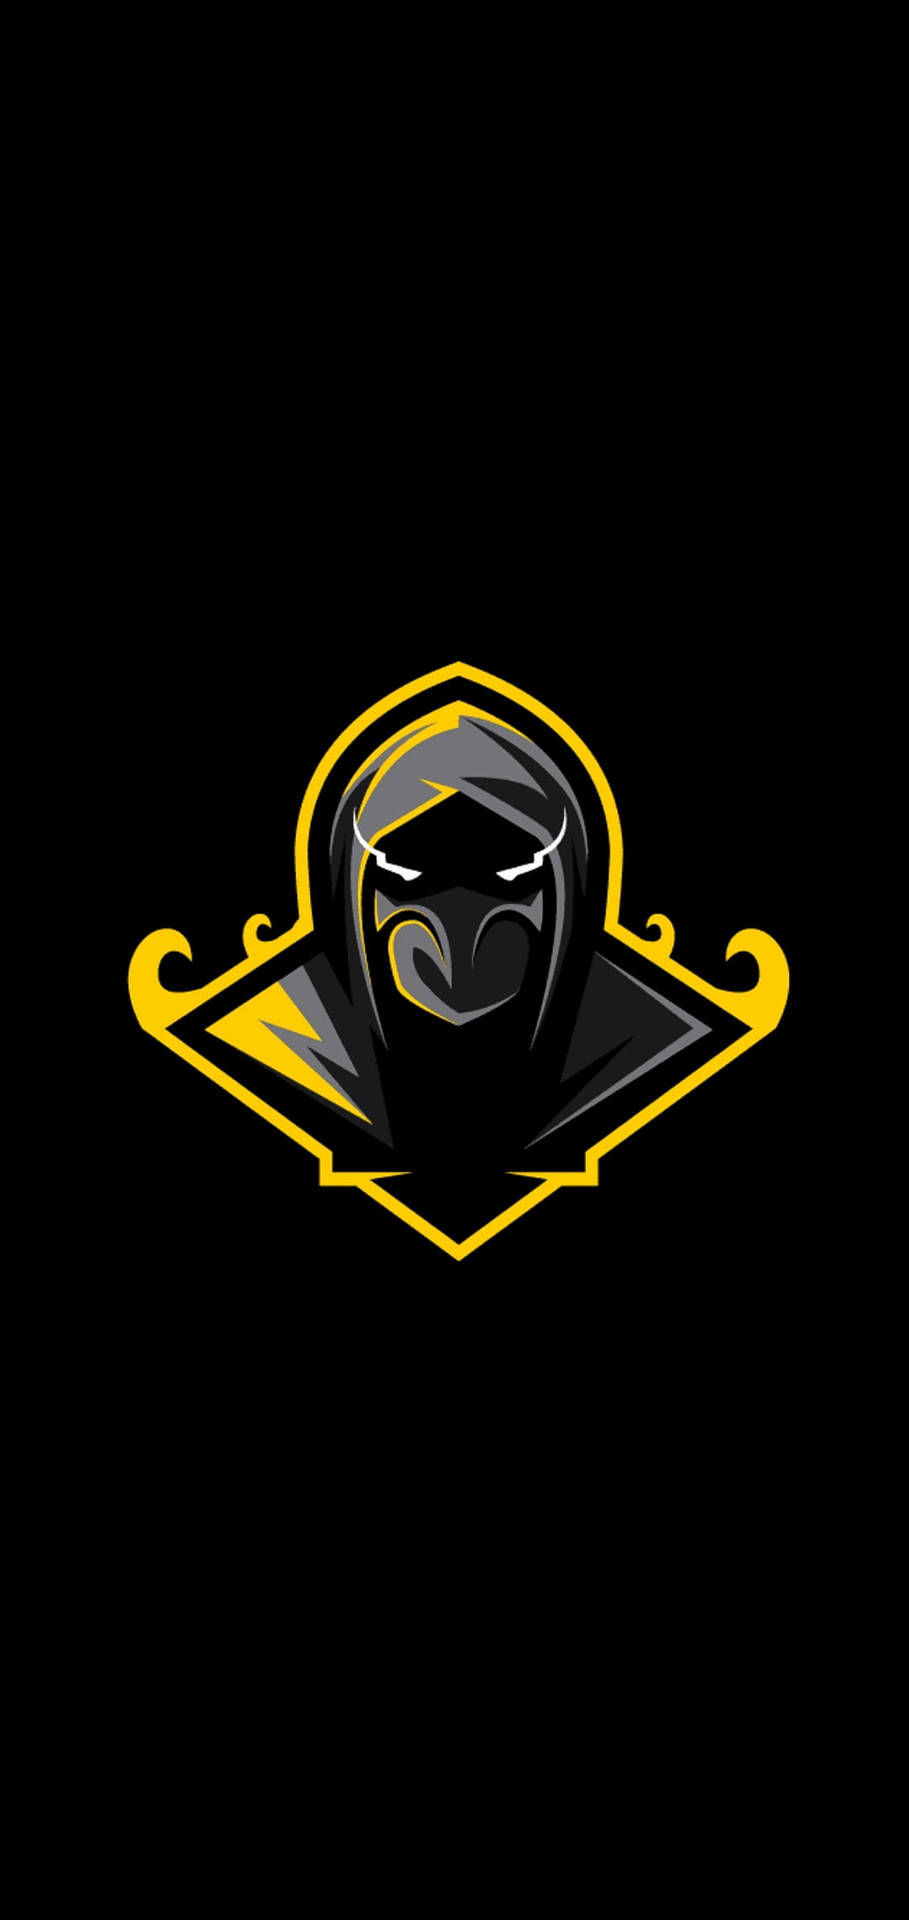 Hooded Bull Gaming Logo Hd